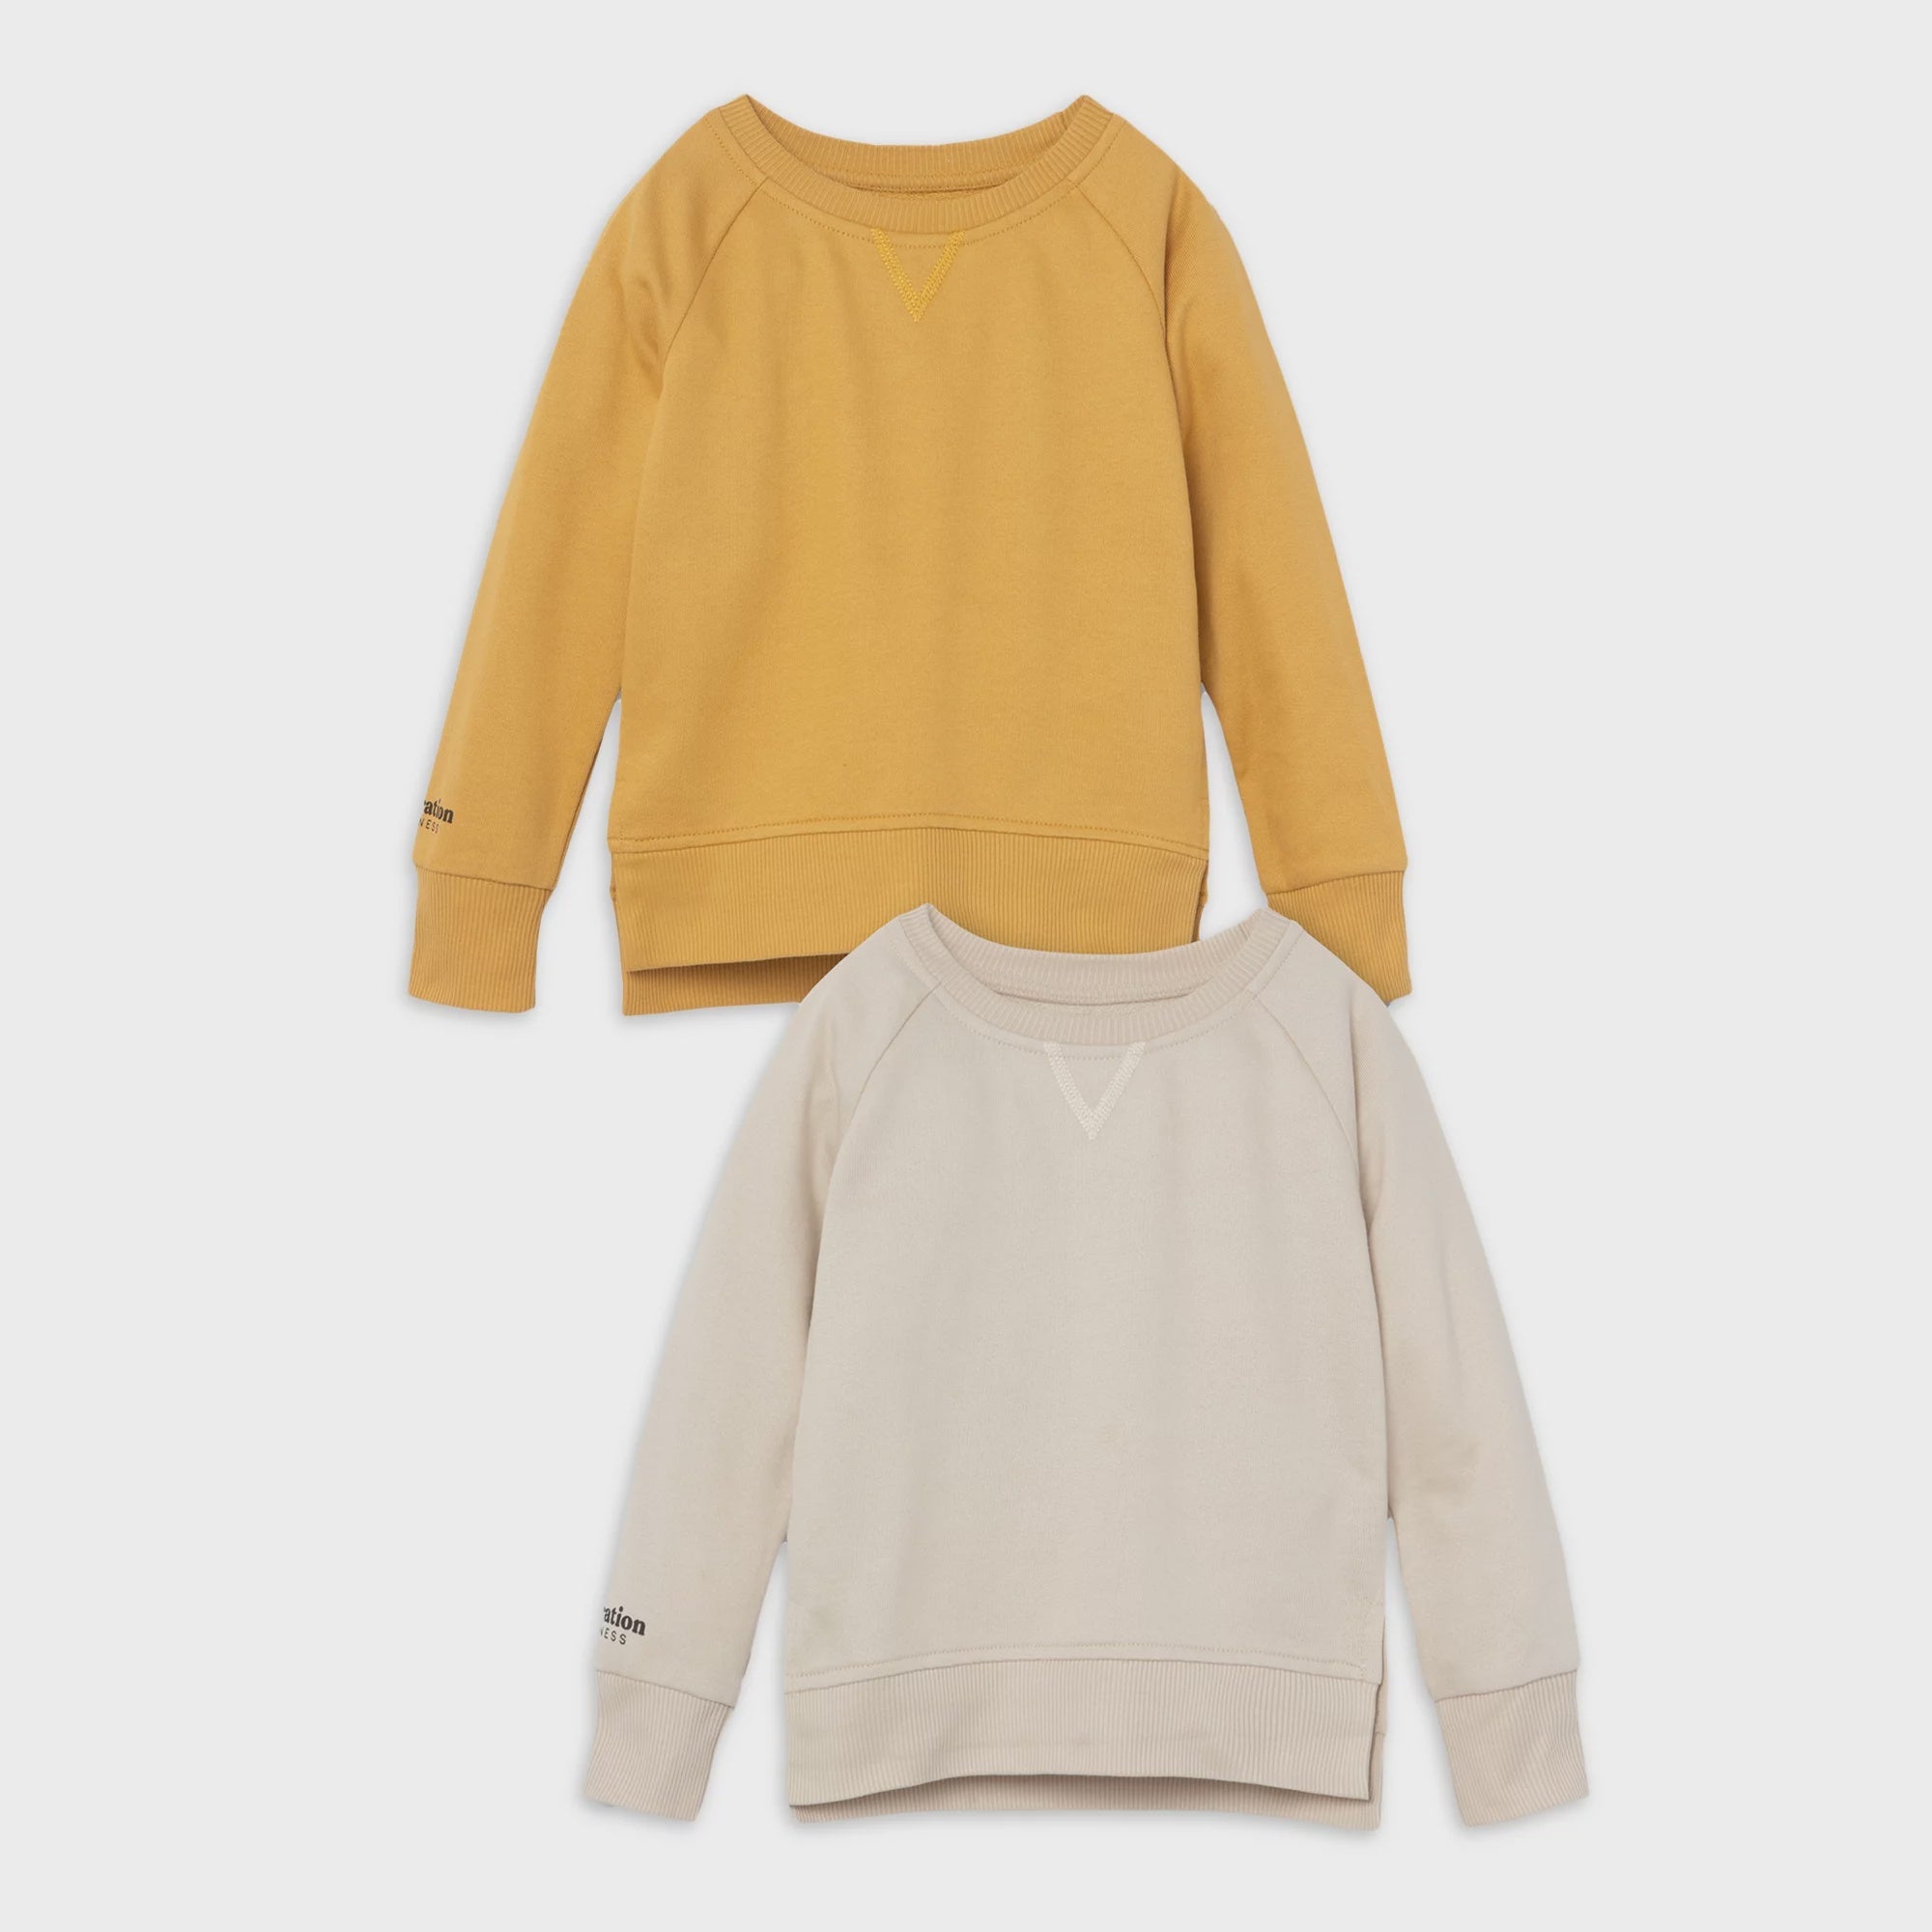 Little Star Organic Long Sleeve Sweatshirt, Khaki, 3T